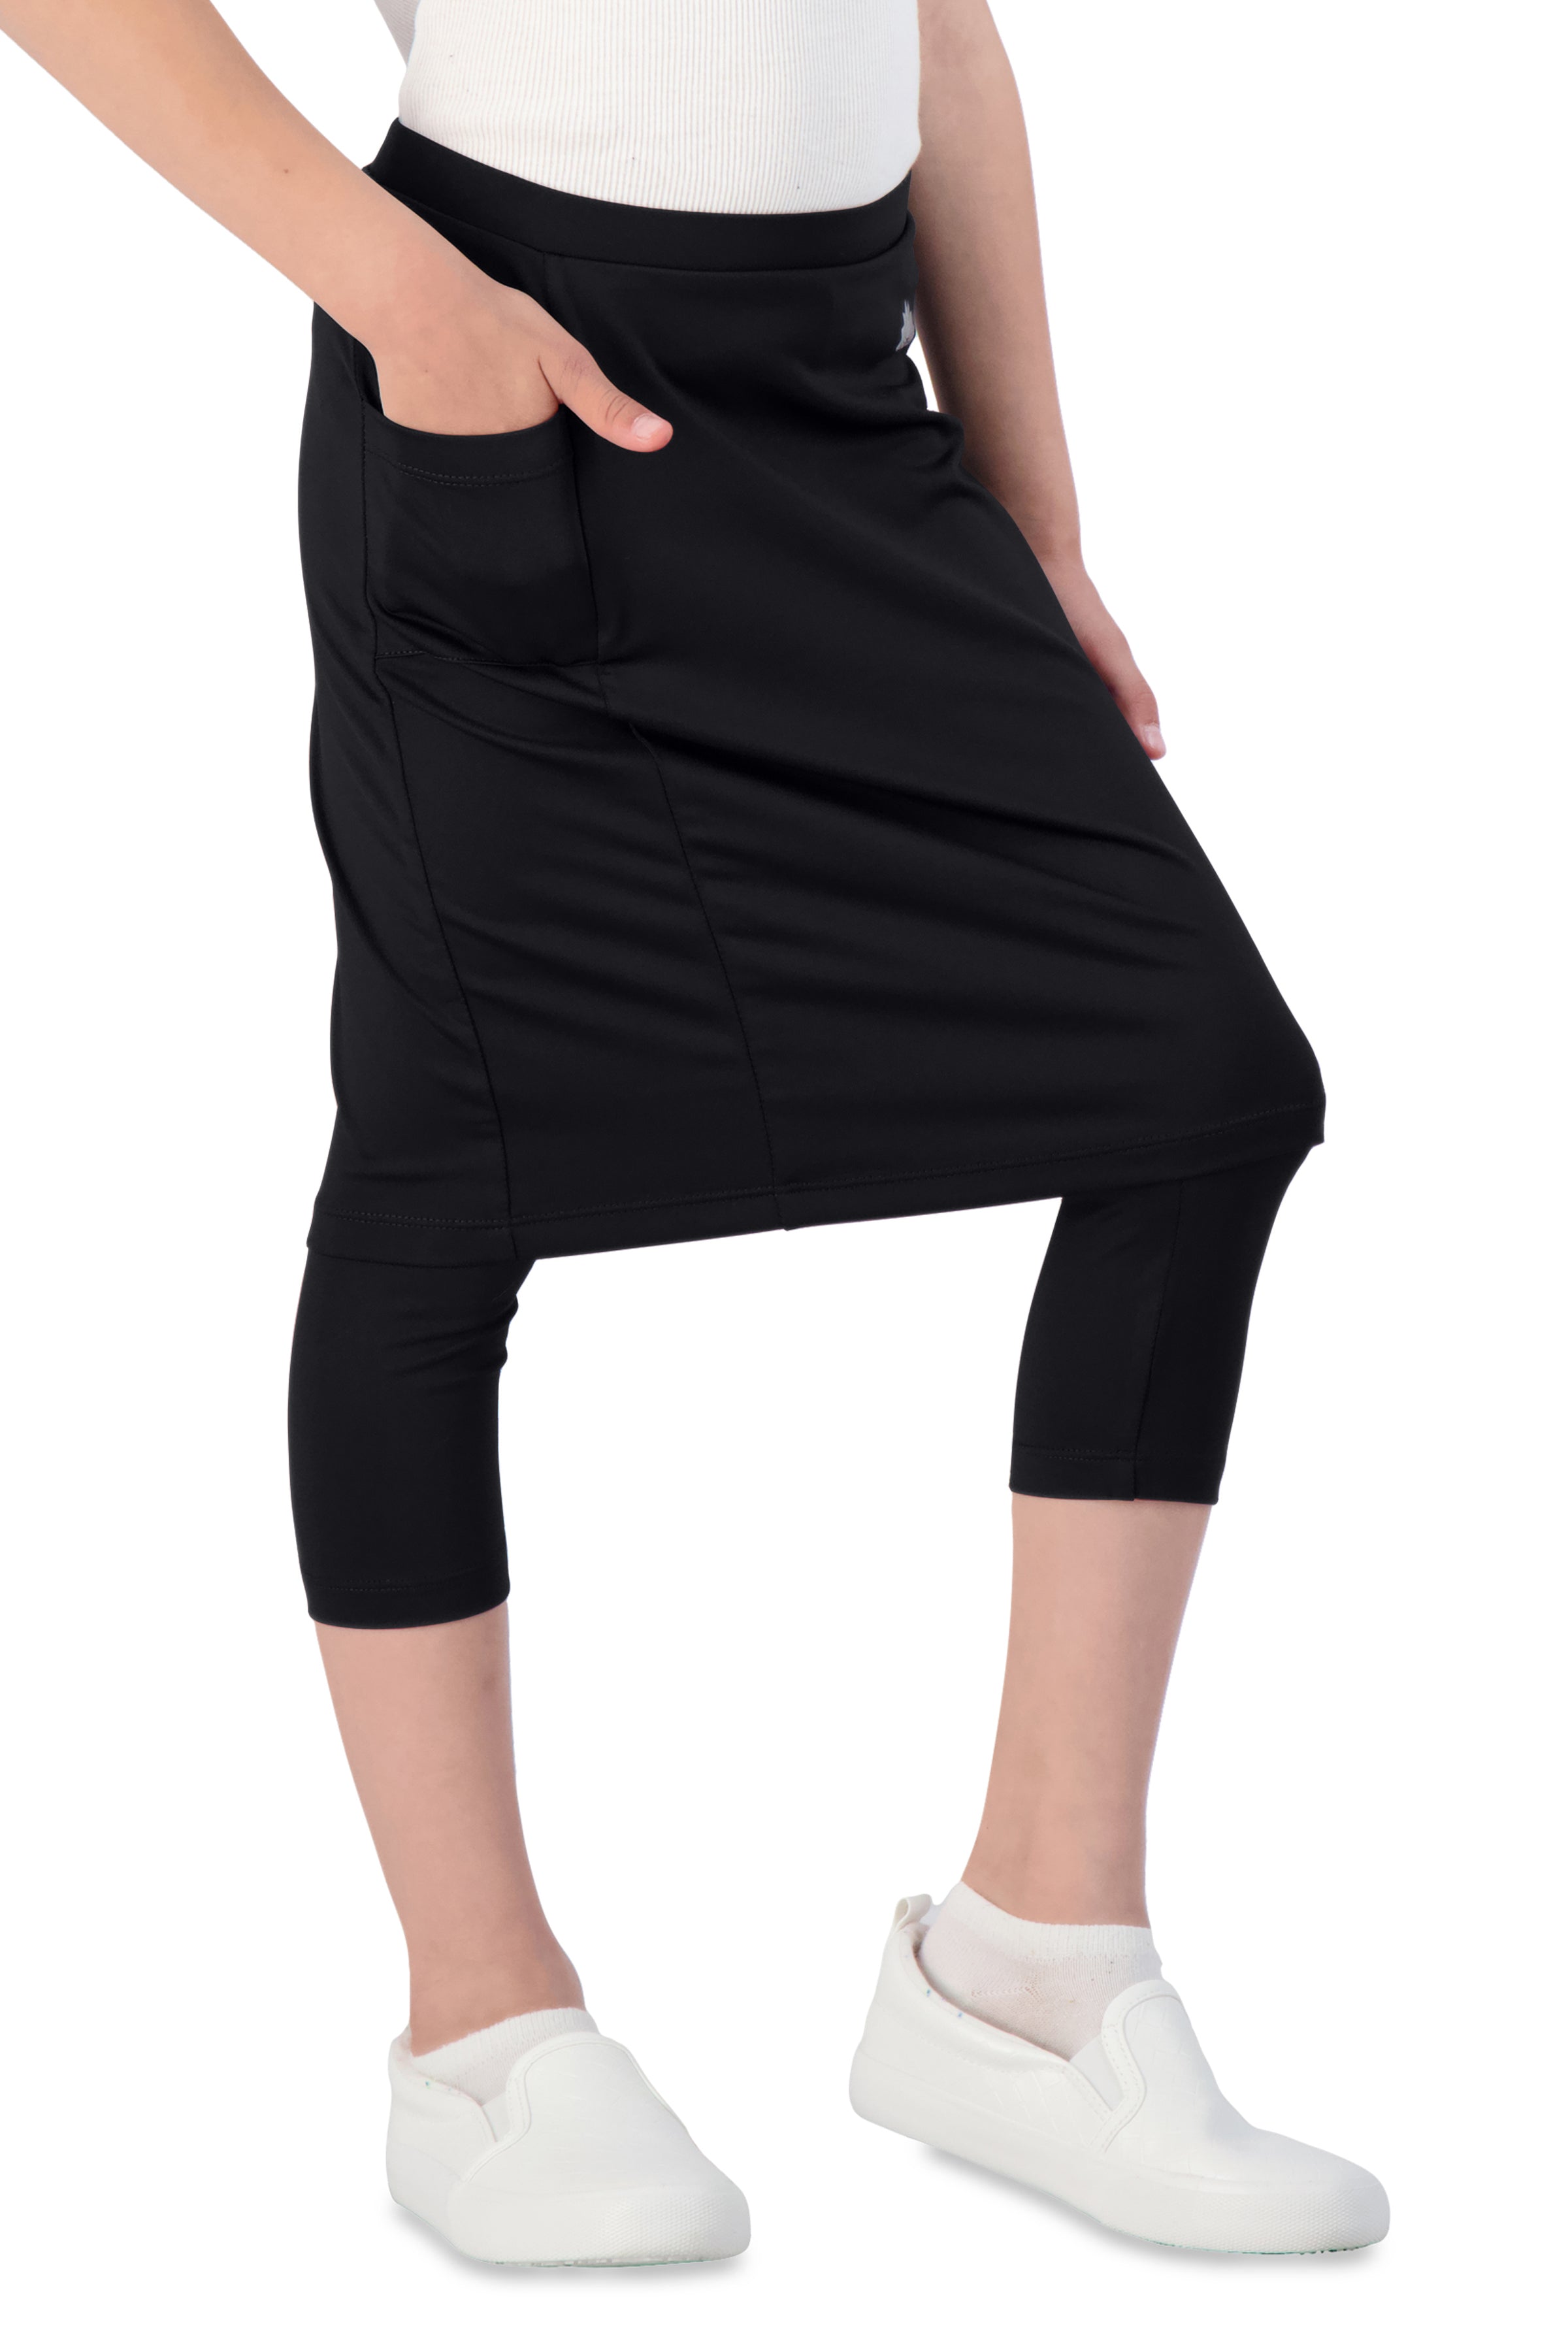 Girls Fit pocket Modest activewear girls modest uniform skirted legging –  Snoga Athletics